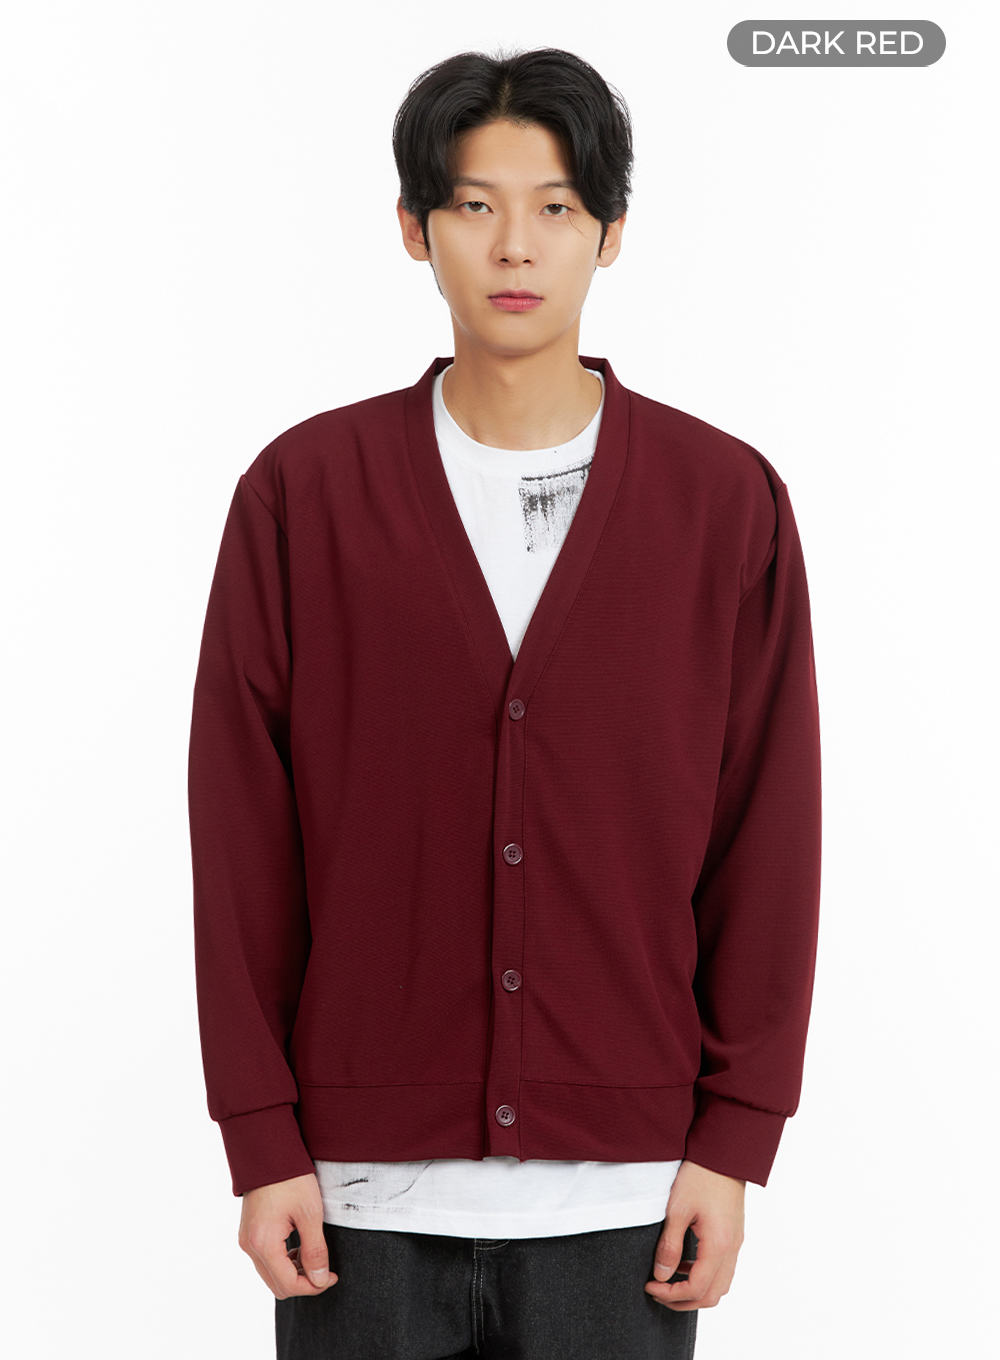 mens-v-neck-buttoned-knit-cardigan-ia402 / Dark red